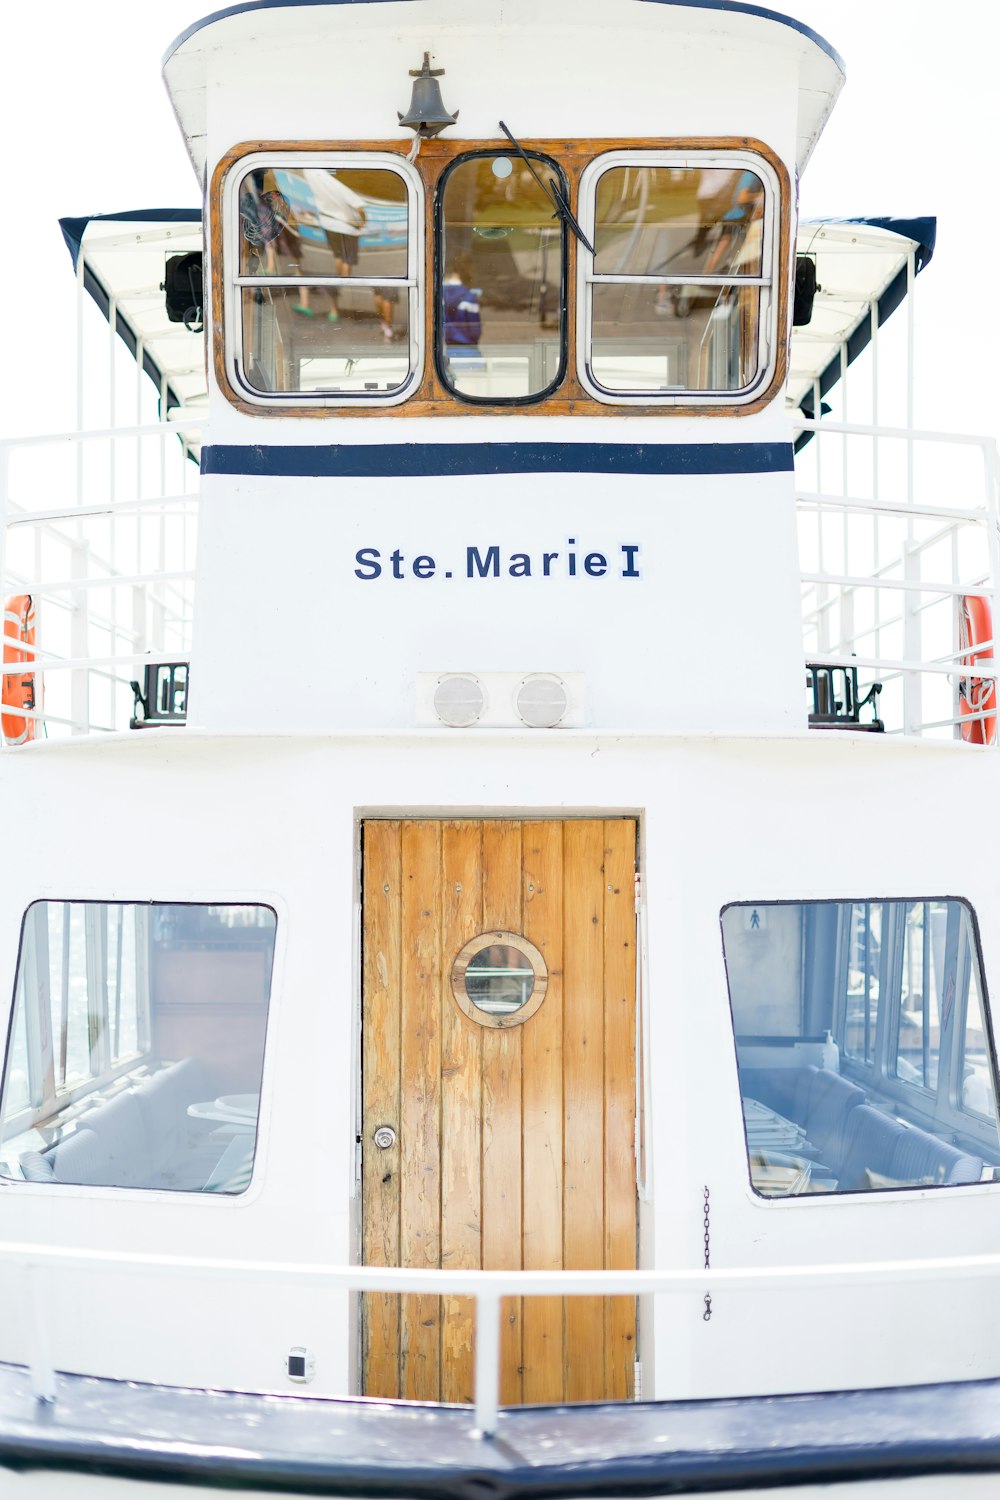 Ste. Mariel ship